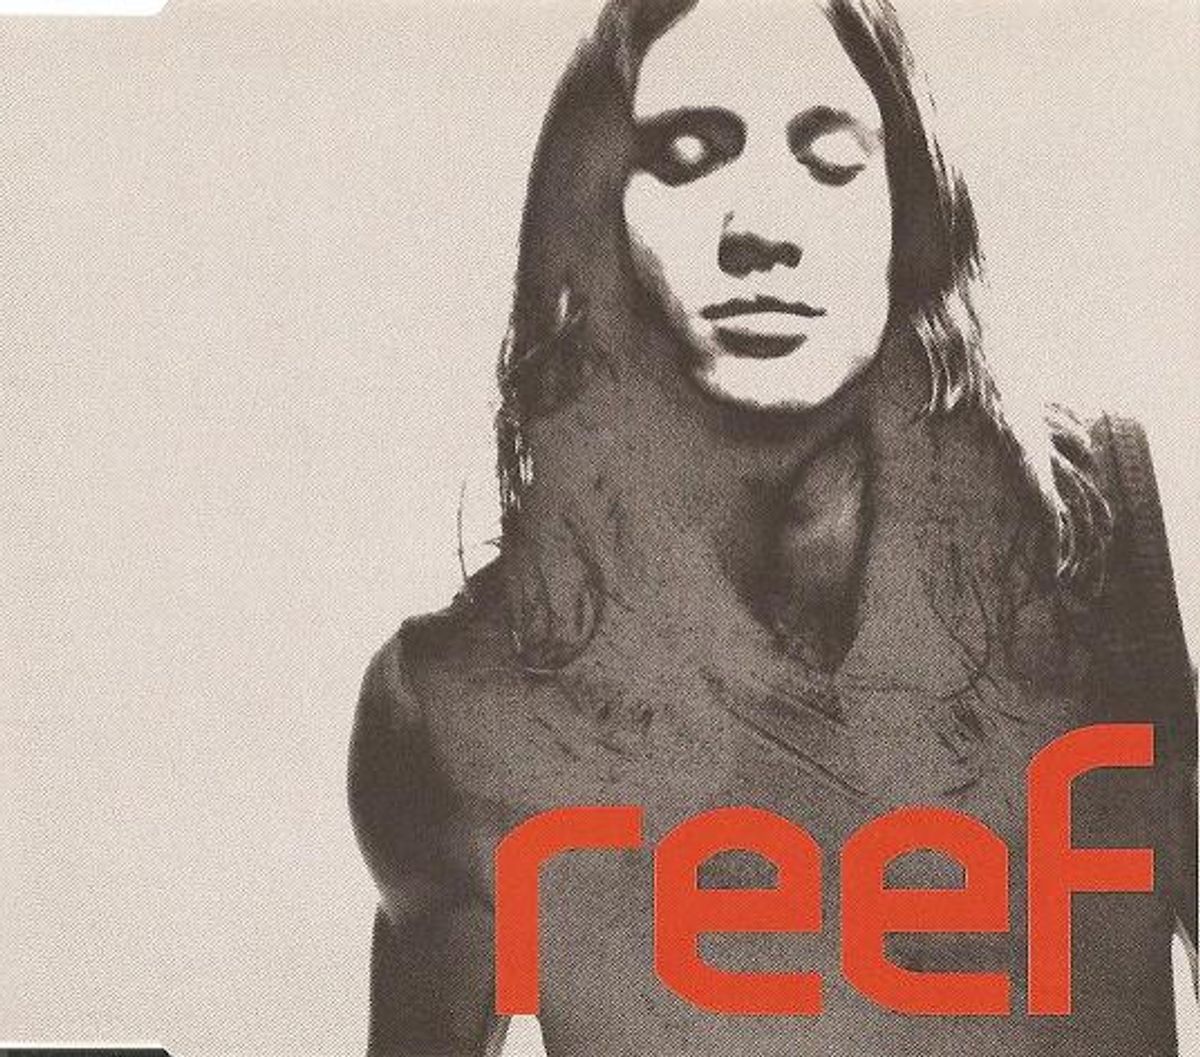 #Britpopweek - Reef - Consideration (1997)